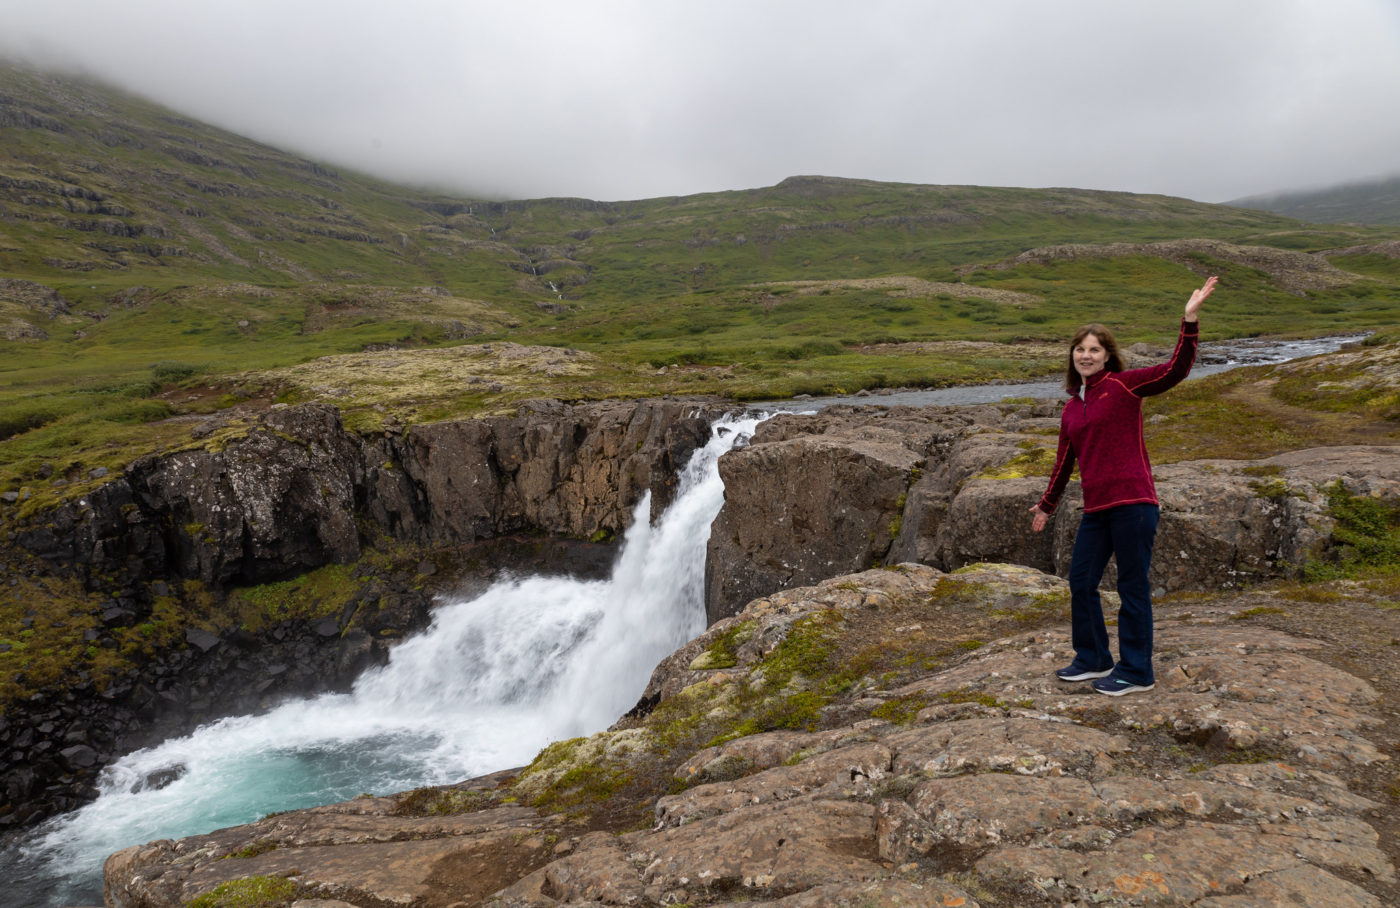 Scenic Seydisfjordur, Iceland Highlights – Blue Church, Waterfalls, Fjords & Wildflowers